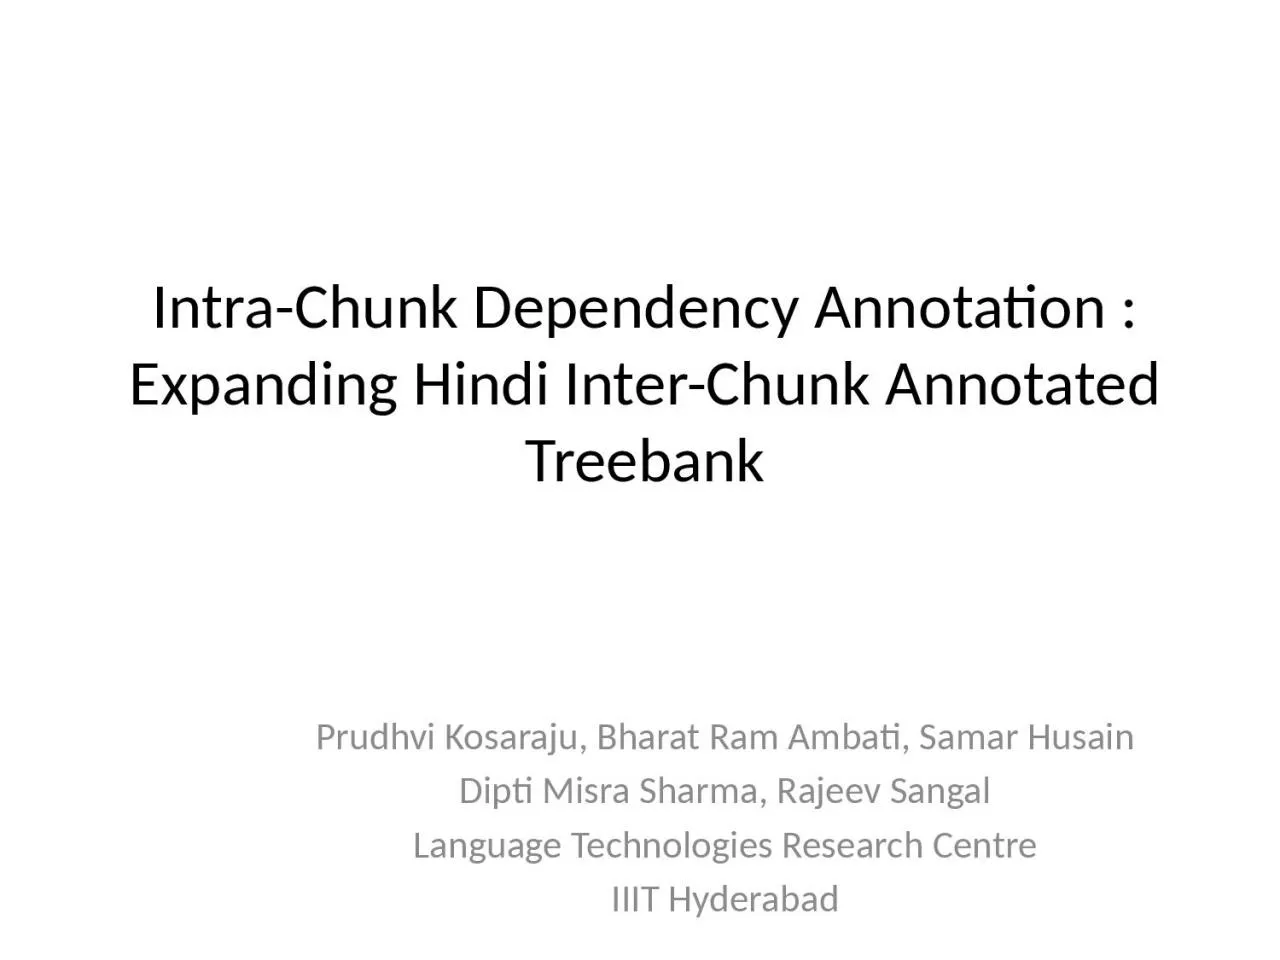 Intra-Chunk Dependency Annotation : Expanding Hindi Inter-Chunk Annotated Treebank